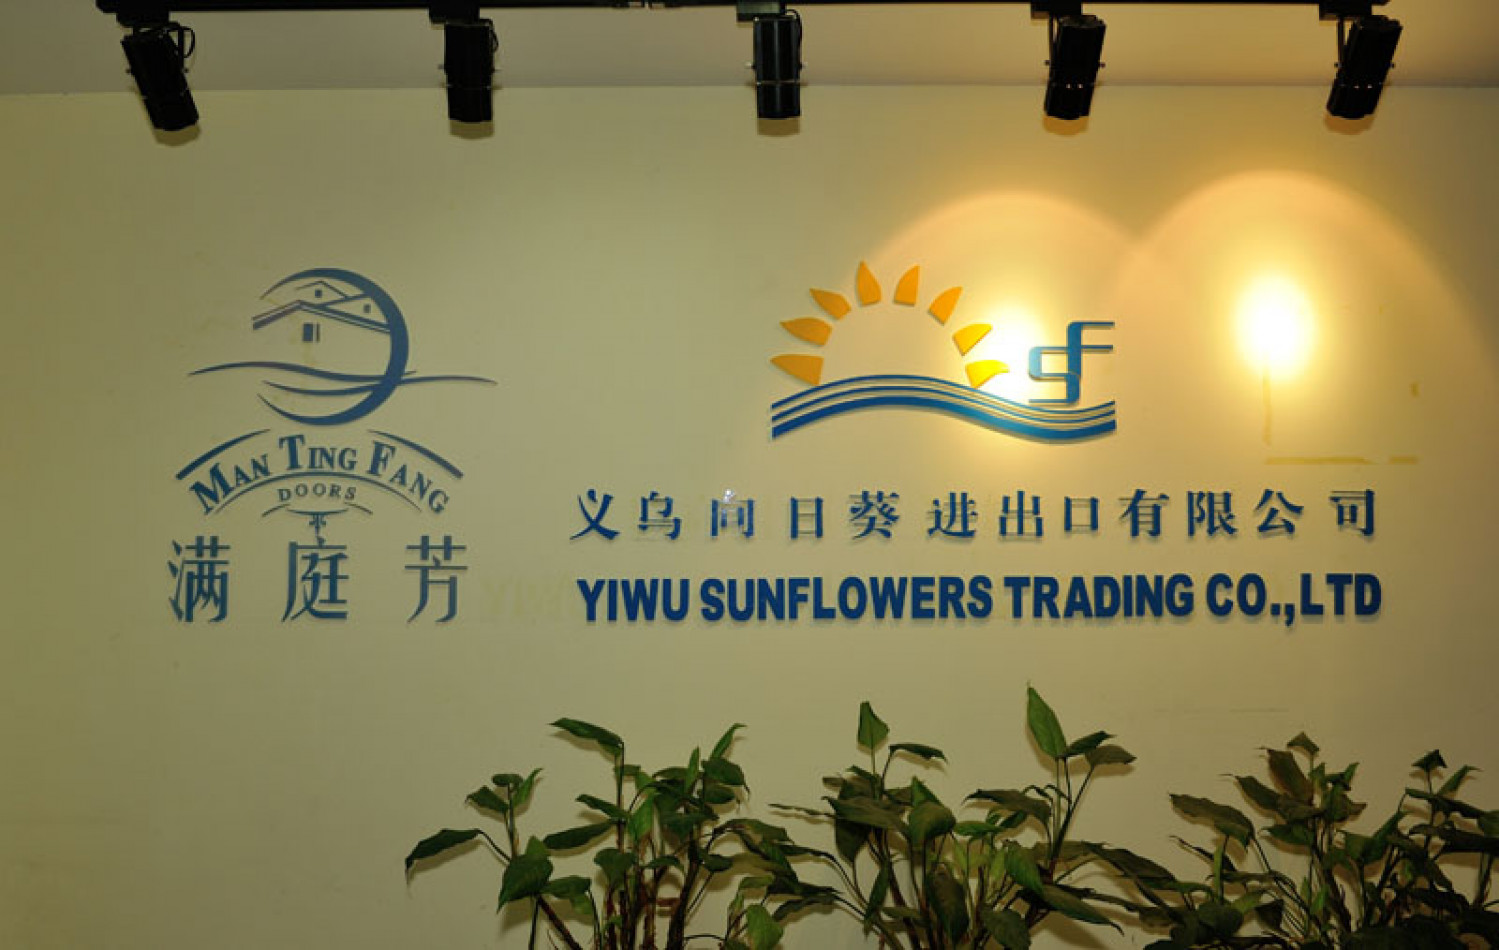 Yiwu Sunflowers Trading co.,ltd.